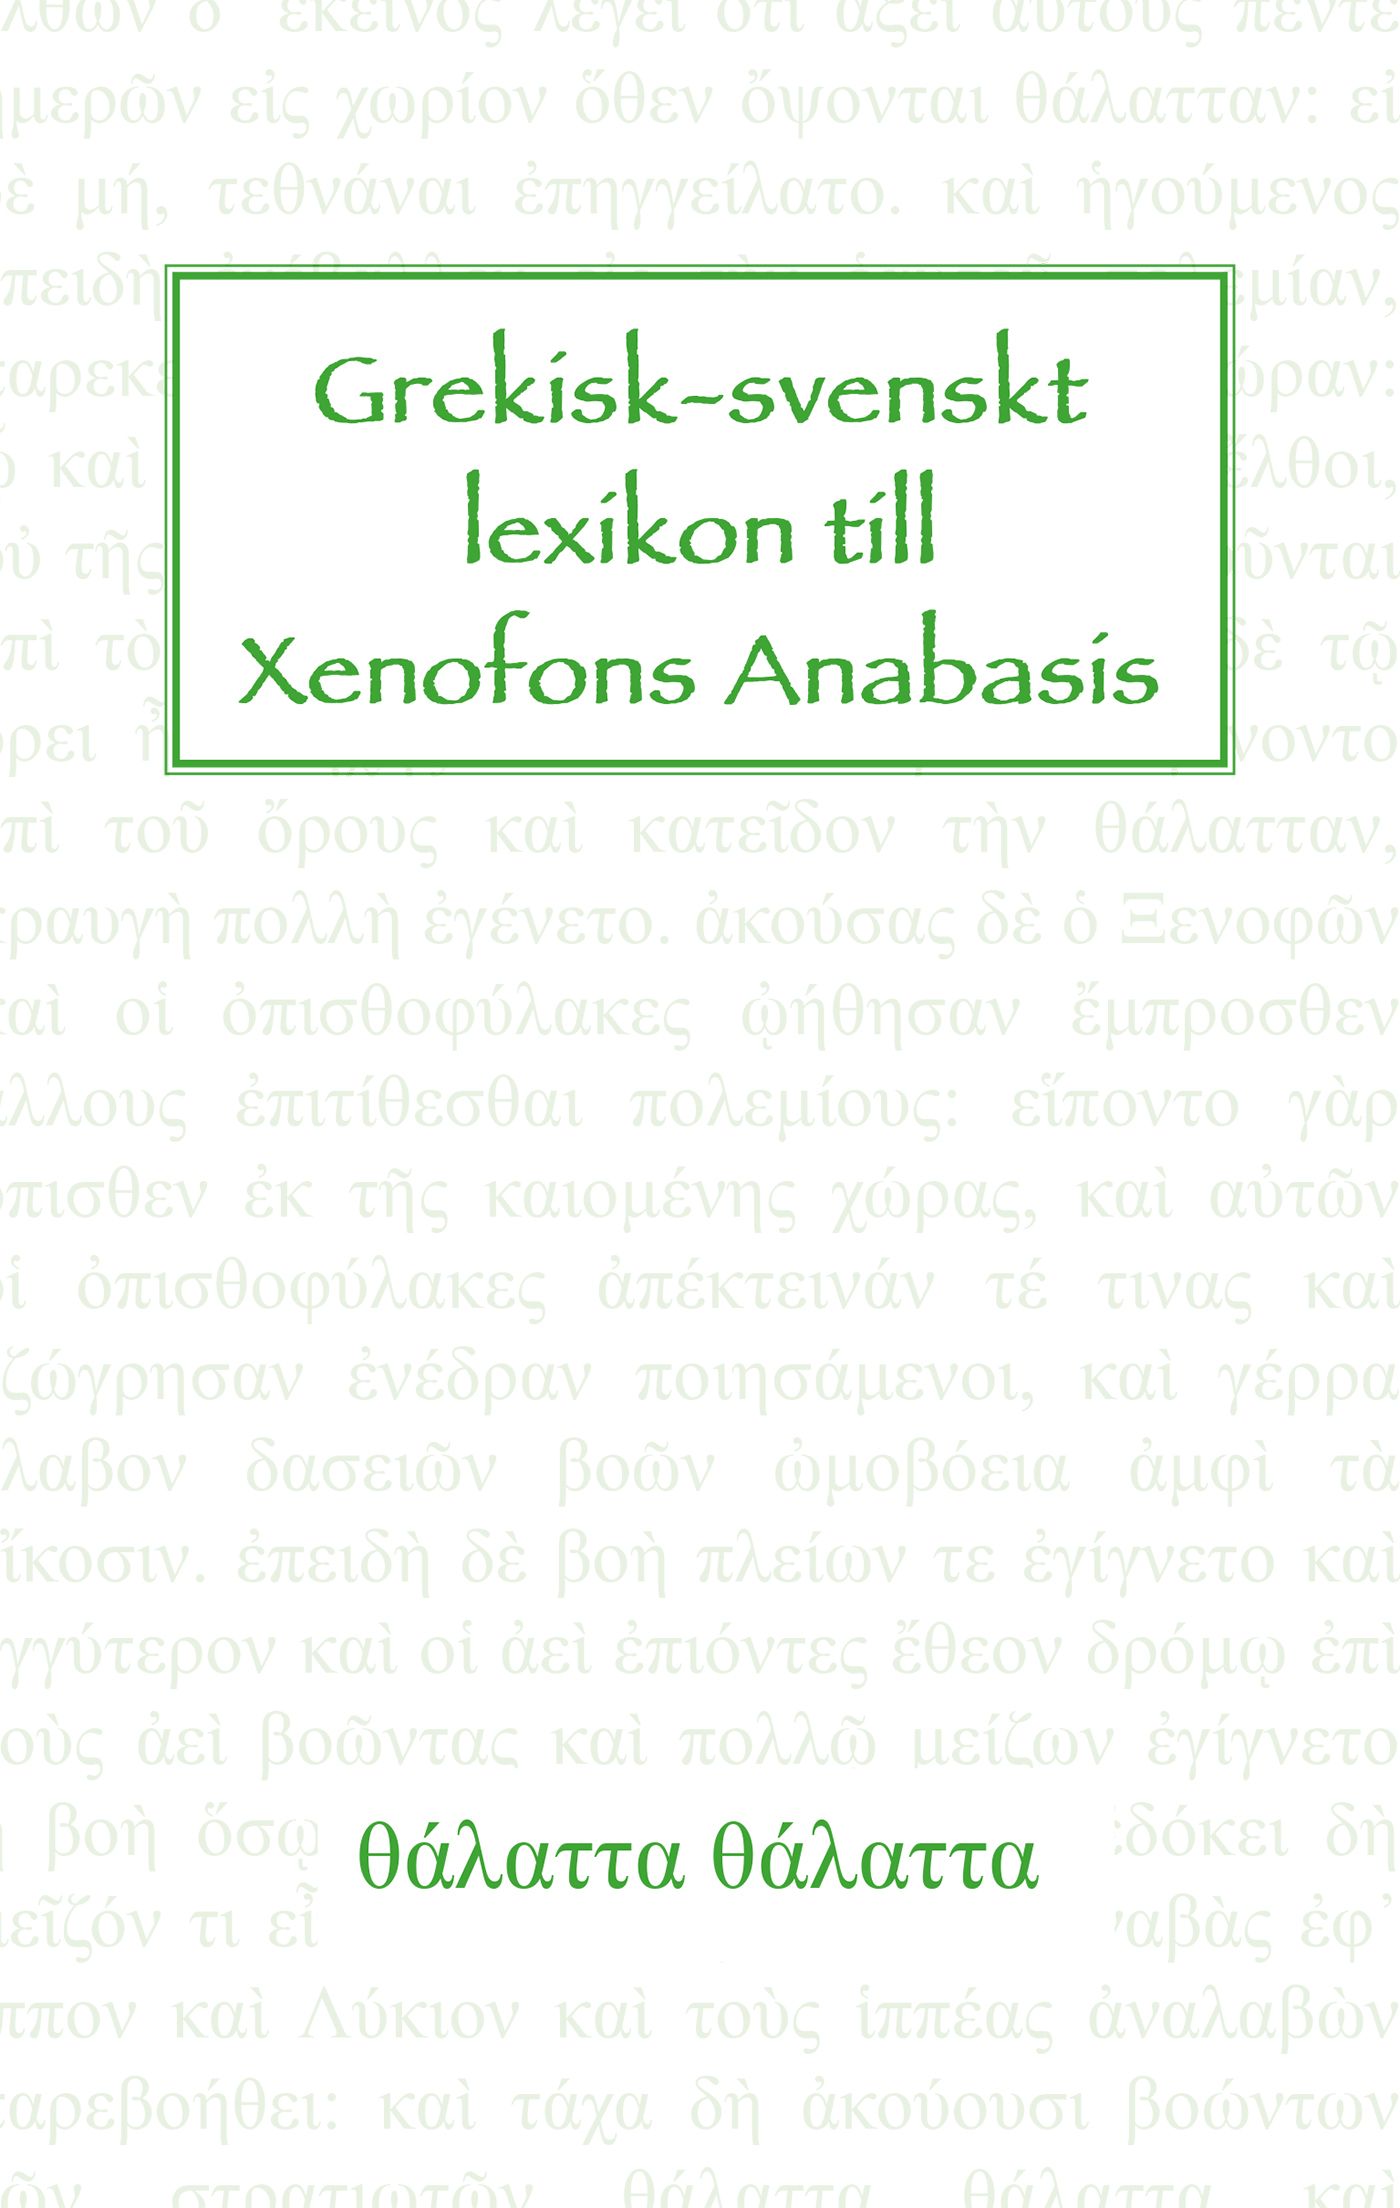 Grekisk-svenskt lexikon till Xenofons Anabasis, e-bog af L. A. A. Aulin